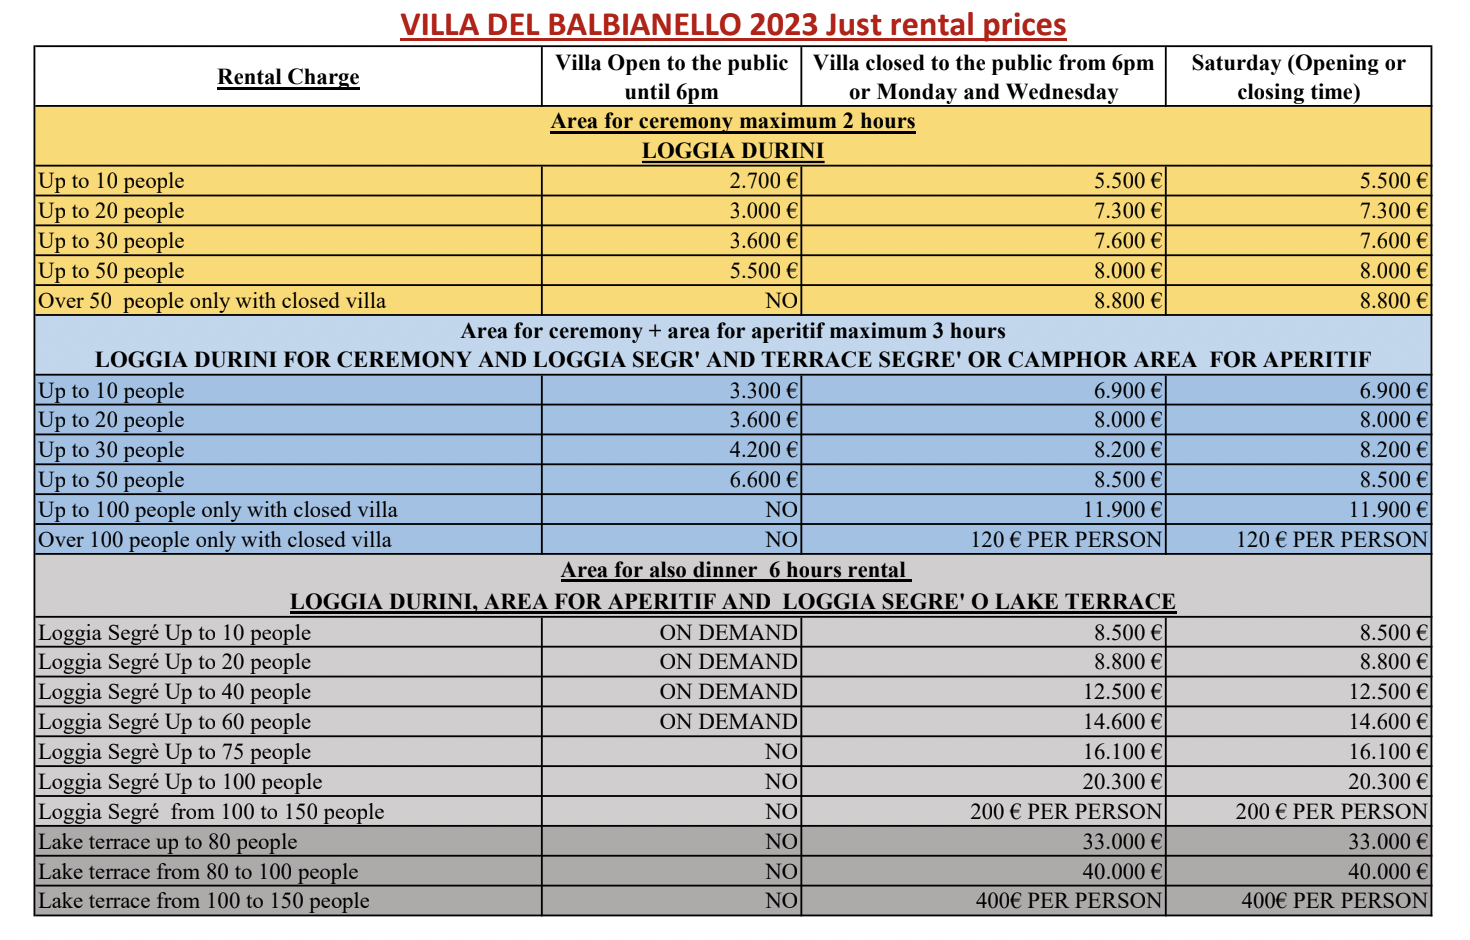 Villa del Balbianello 2023 rental prices lake como weddings and elopements